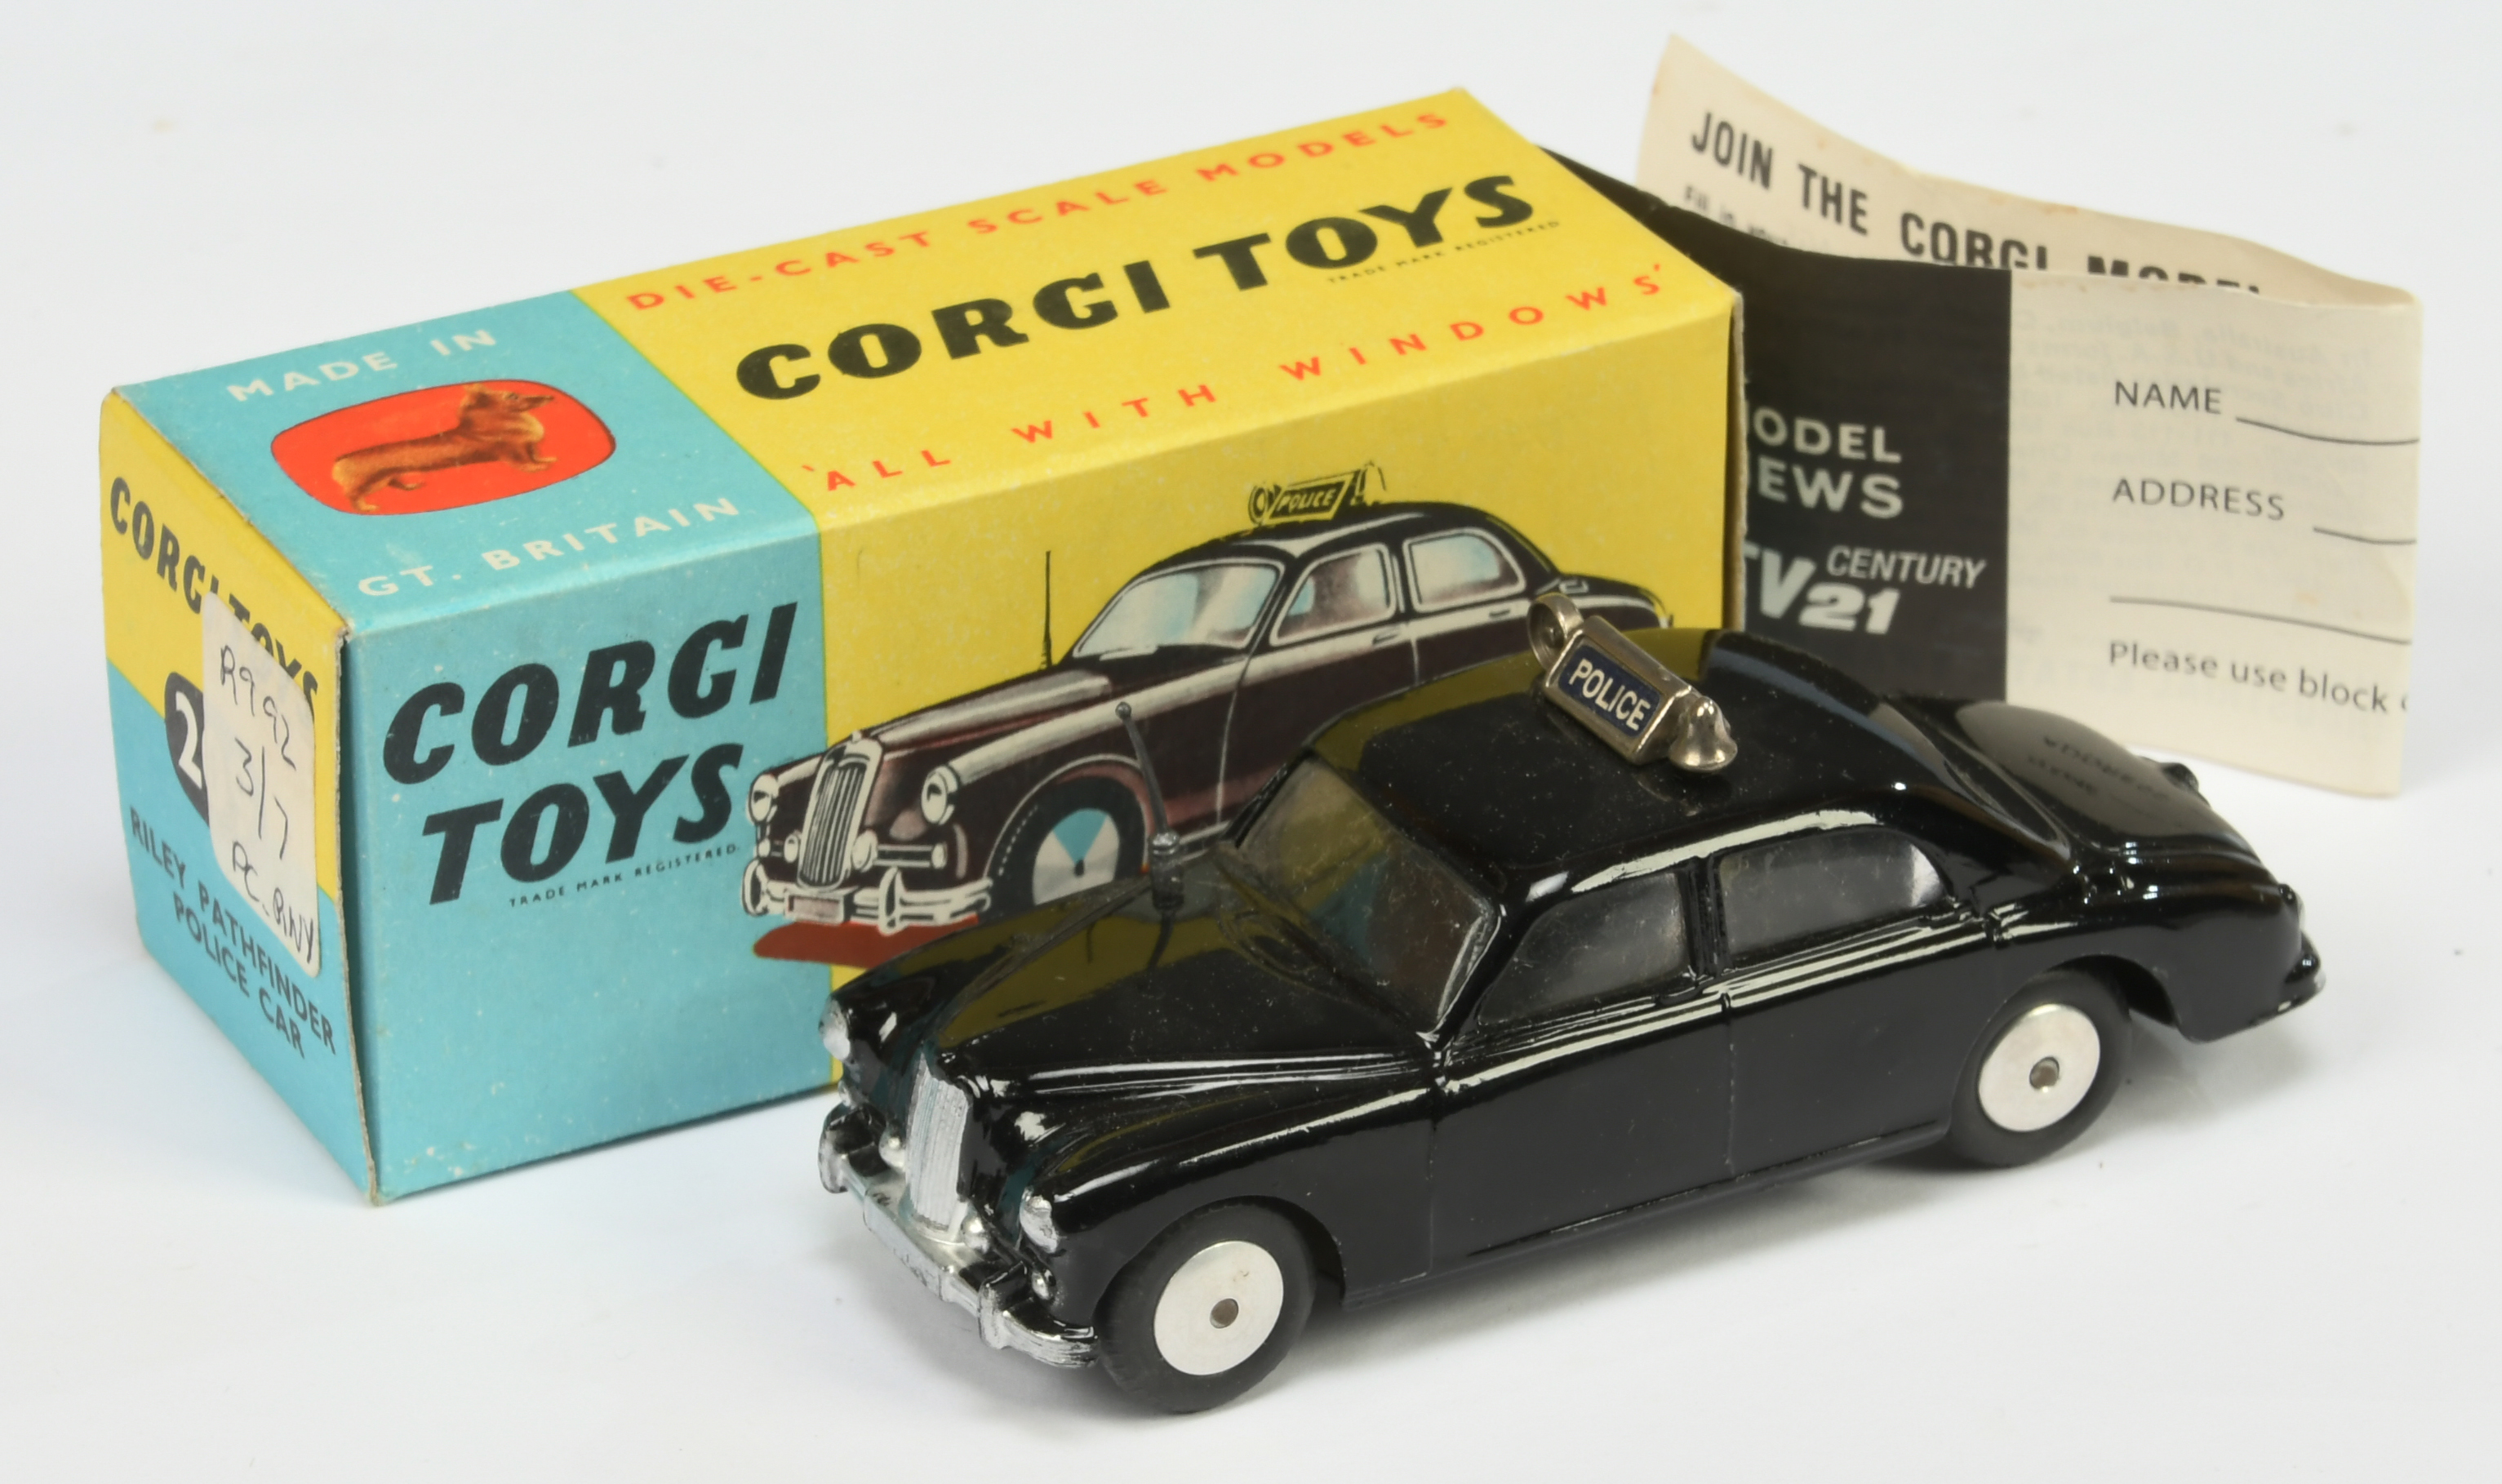 Corgi Toys 209 Riley Pathfinder "police" Car - Black body, silver trim, aerial, flat spun hubs - ...